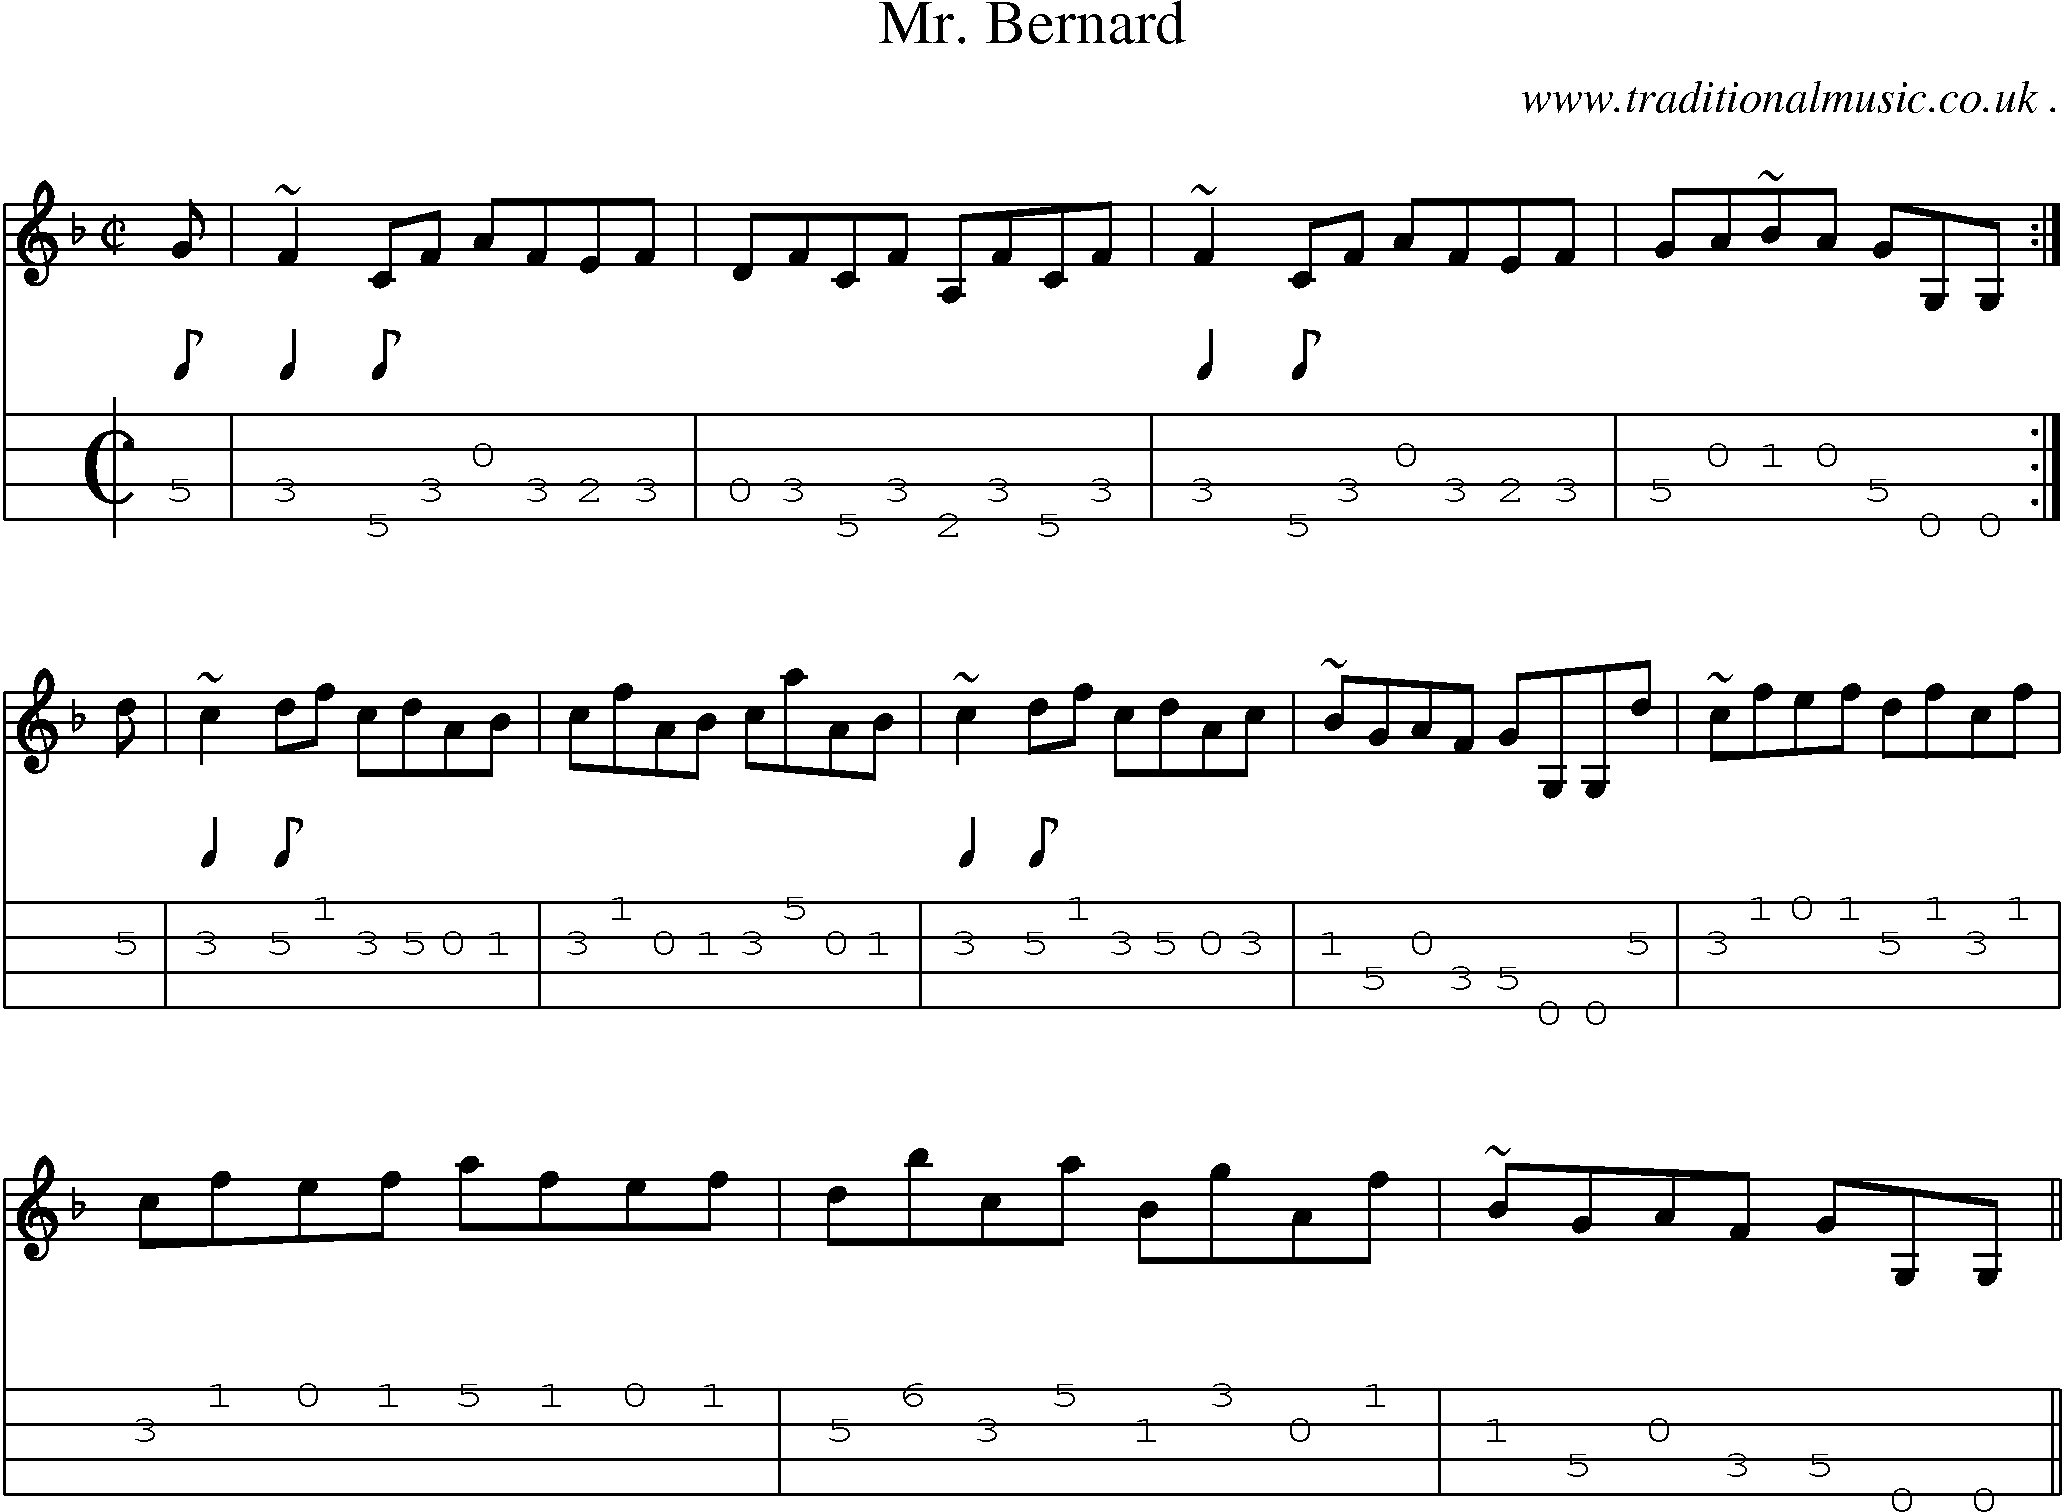 Sheet-music  score, Chords and Mandolin Tabs for Mr Bernard